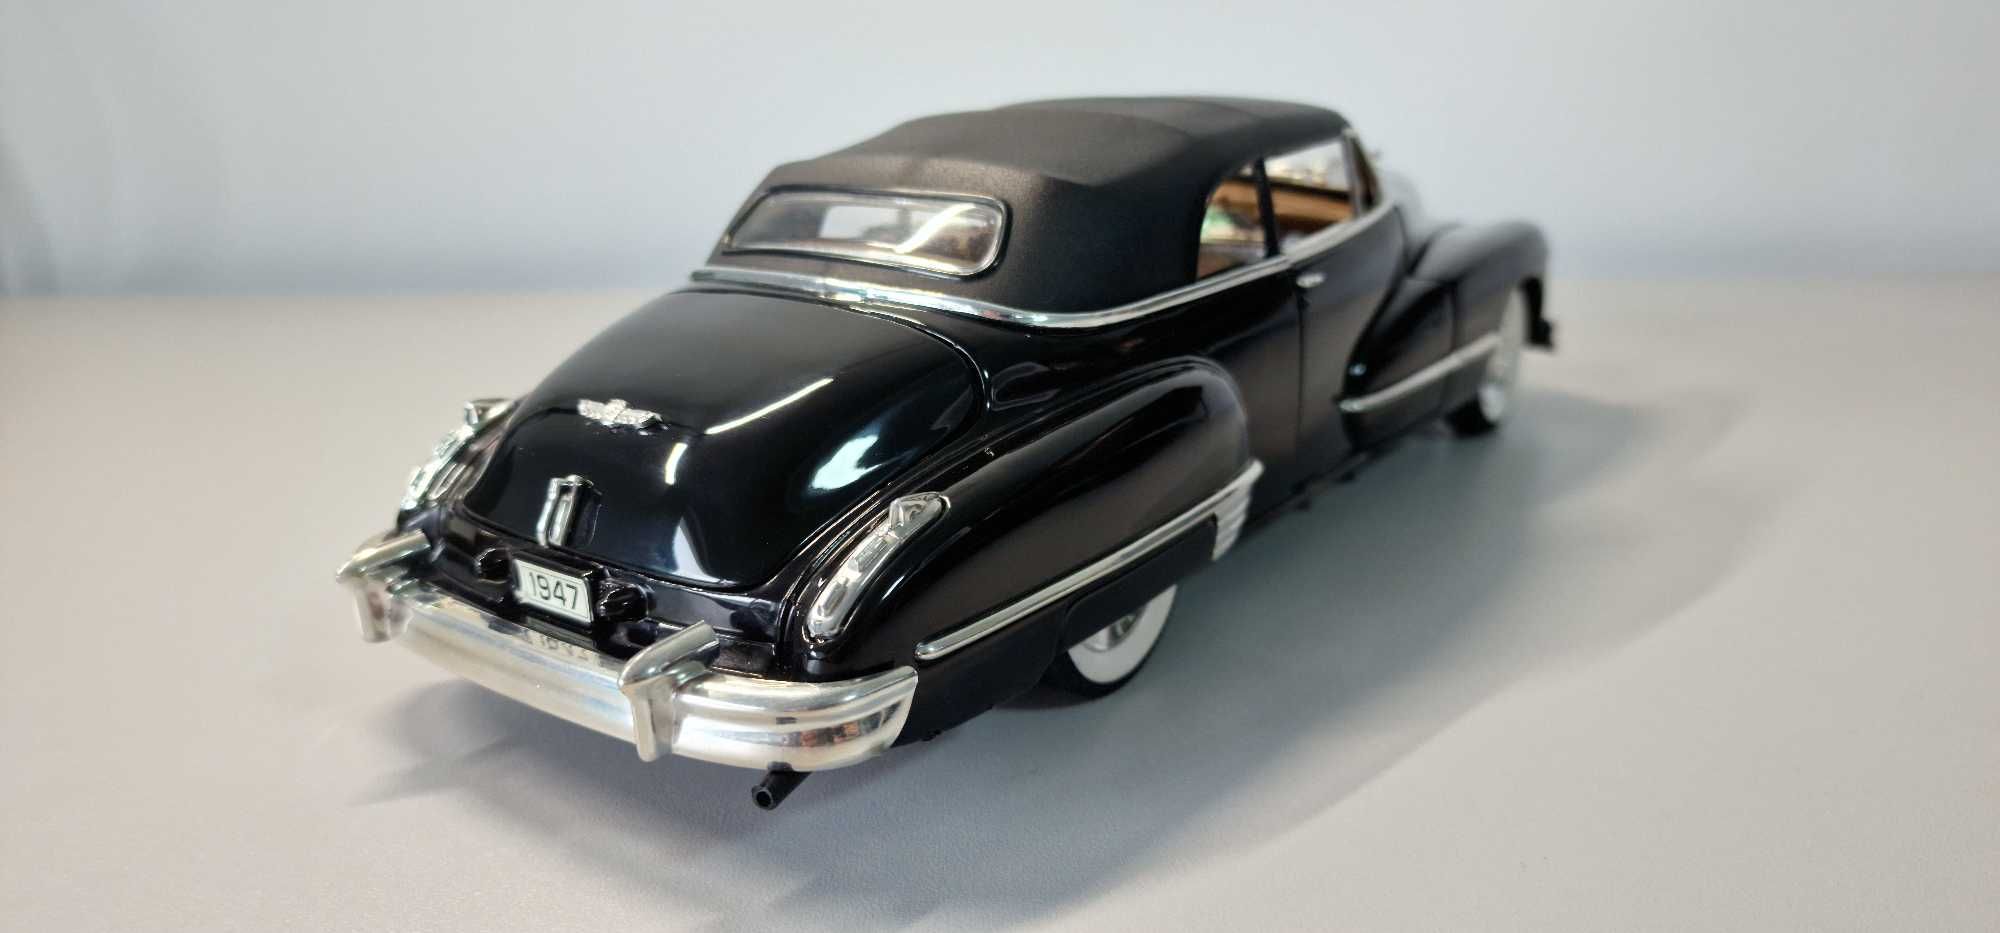 Macheta auto 1947 Cadillac Series 62, scara 1:18, Anson